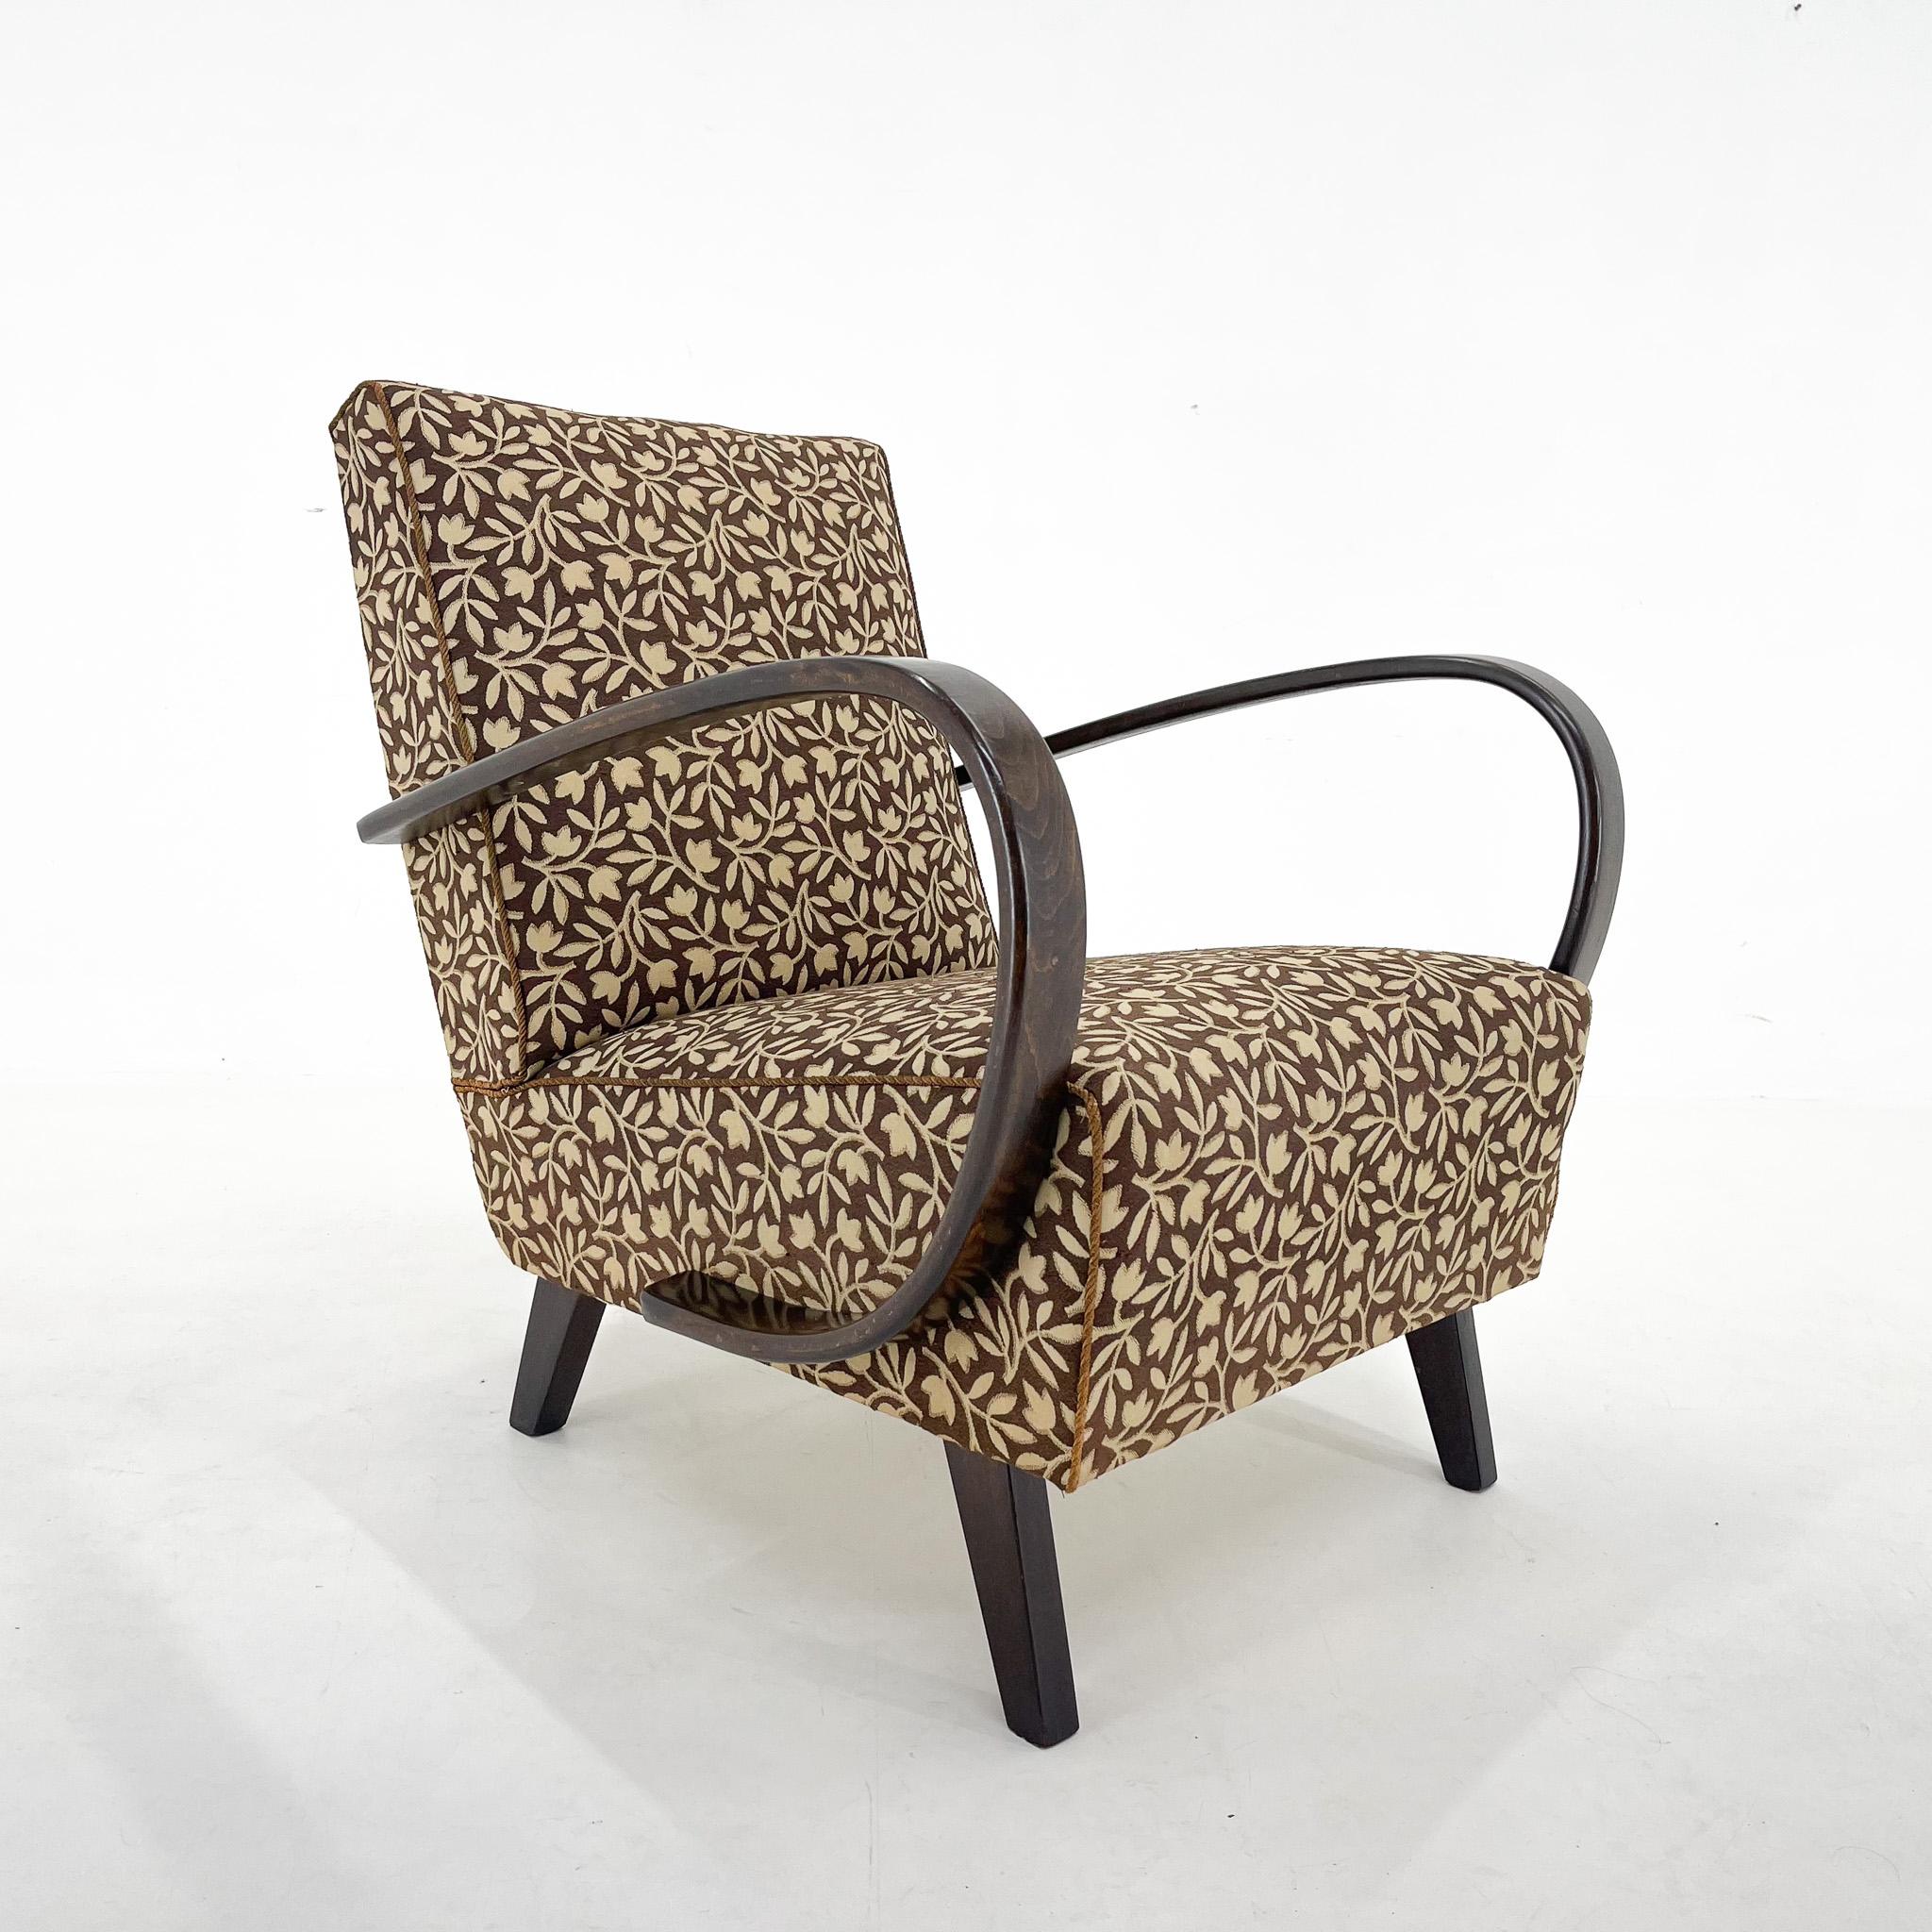 Vintage, midcentury armchair designed by famous Jindrich Halabala. 
Original, good condition.